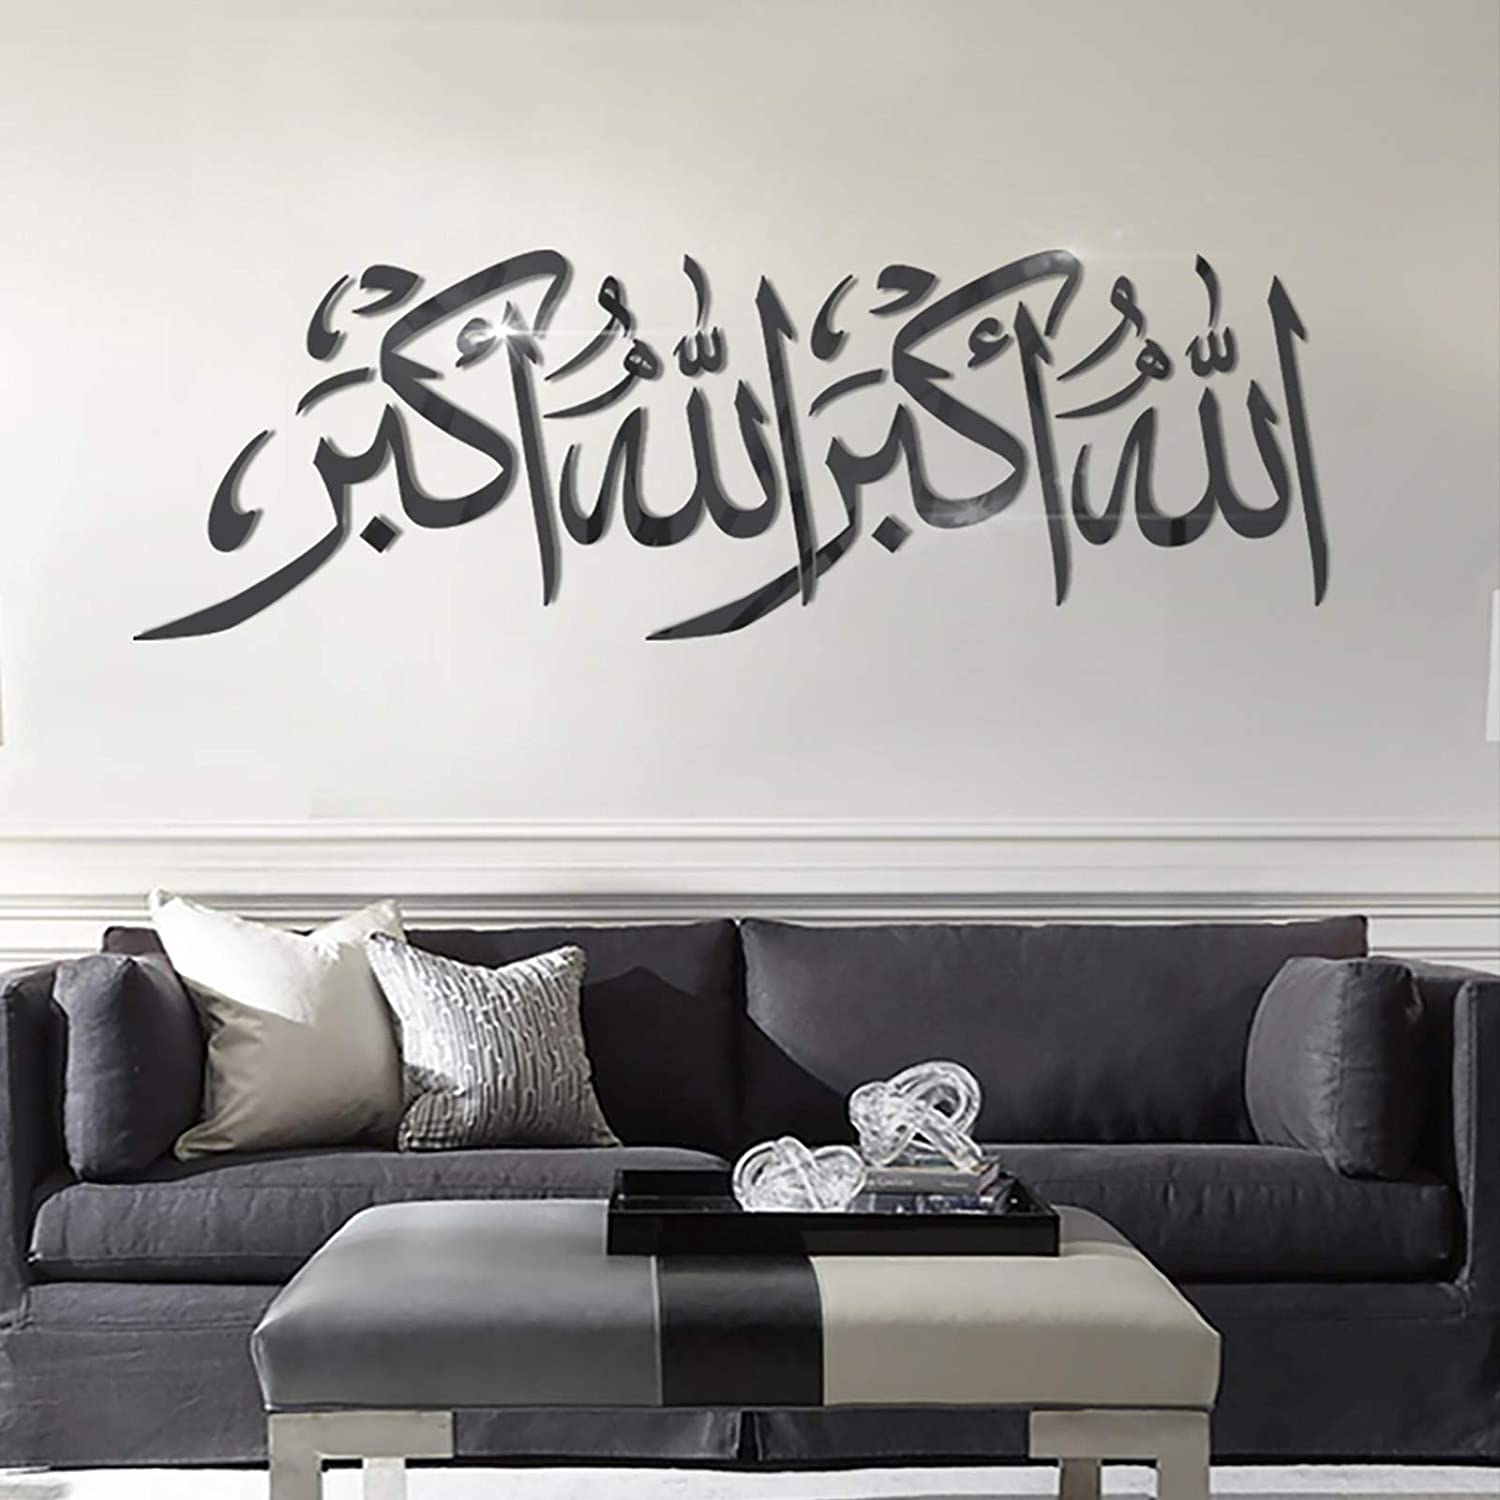 Ayatul Kursi Islamic Wall Art - Islamic Calligraphy, Ramadan Decor, Islamic Wall Decor, Gift for Muslims, Islamıc Wall Decor